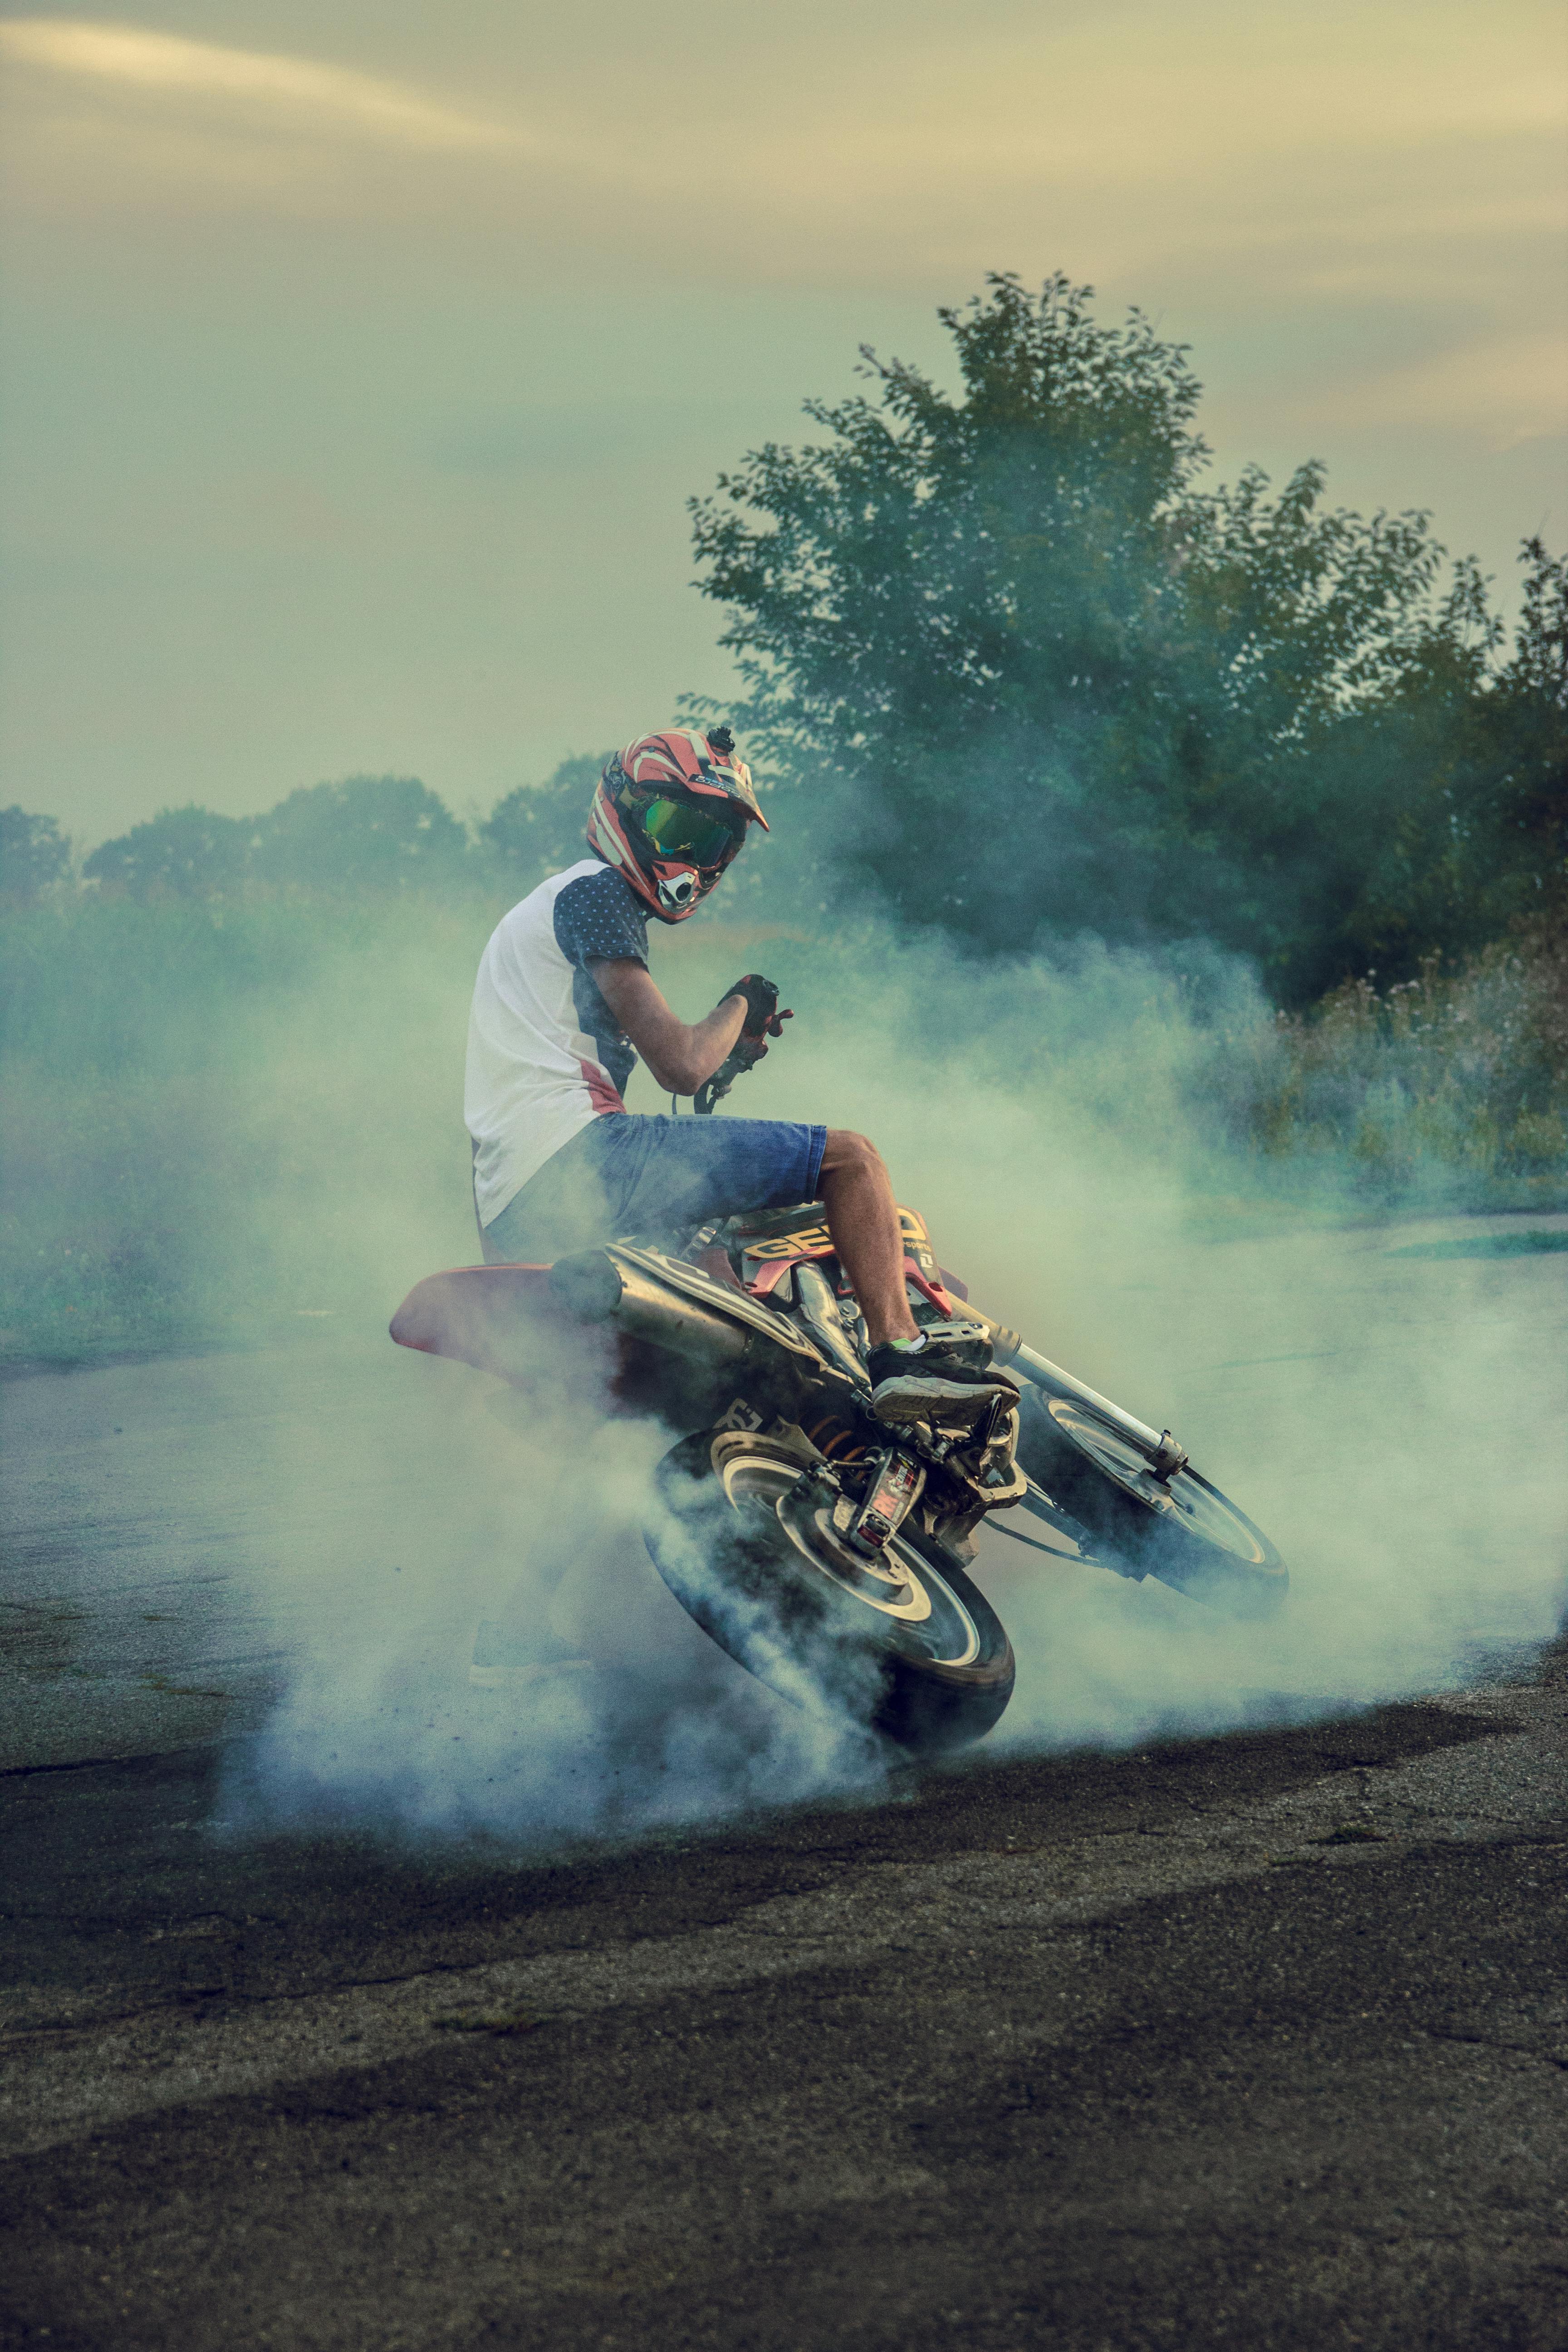 Free stock photo of moto, moto racing, motocross